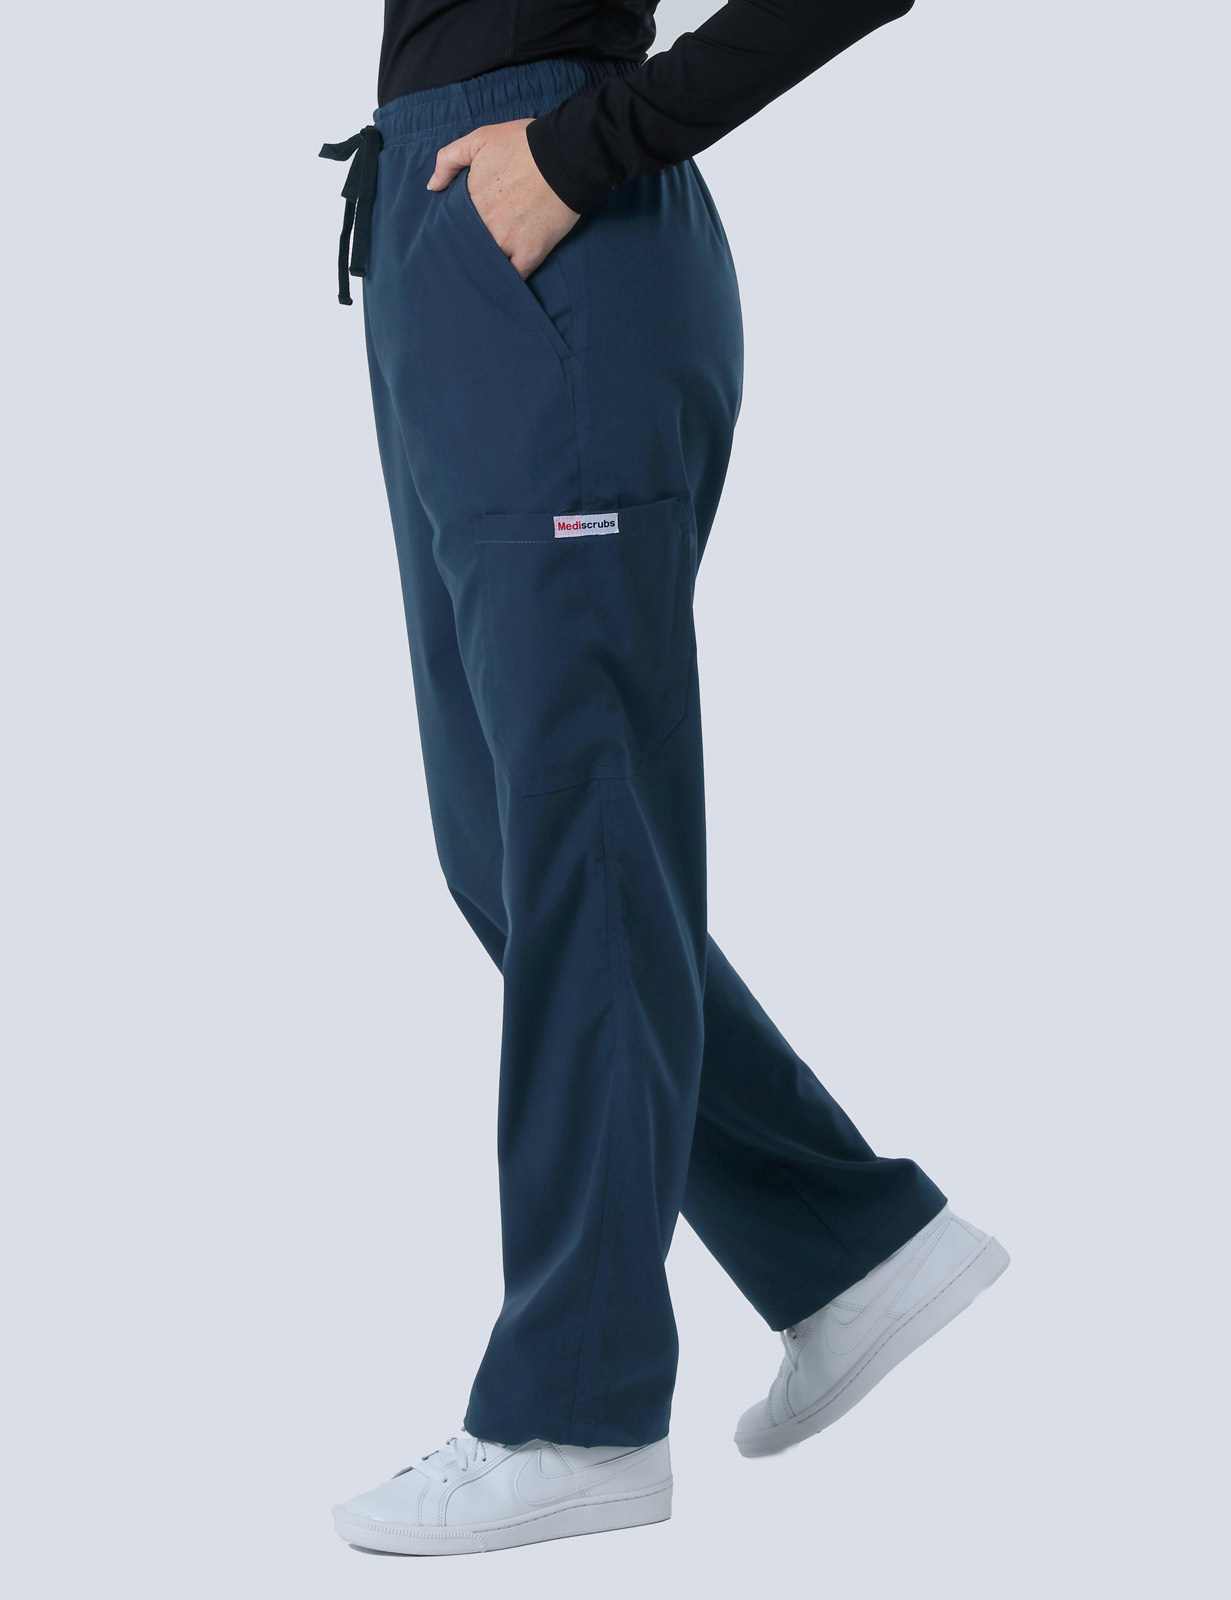 Malvern Endodontics (Women's Fit Spandex Scrub Top and Cargo Pants in Navy incl Logos)